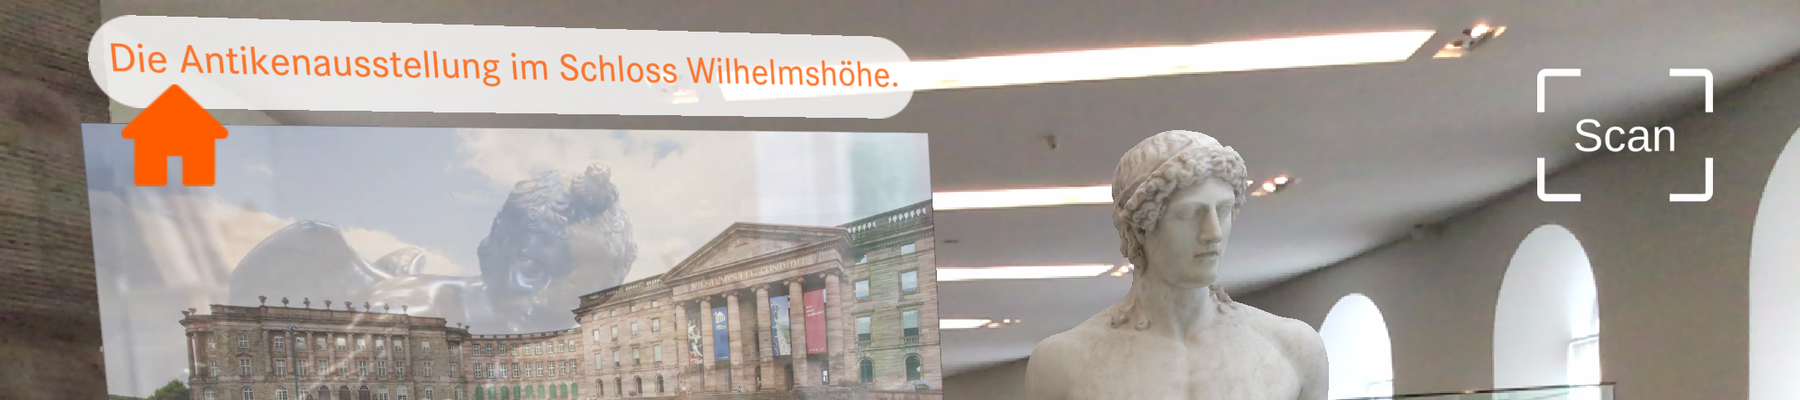 Augmented Reality in der Kasseler Antikensammlung